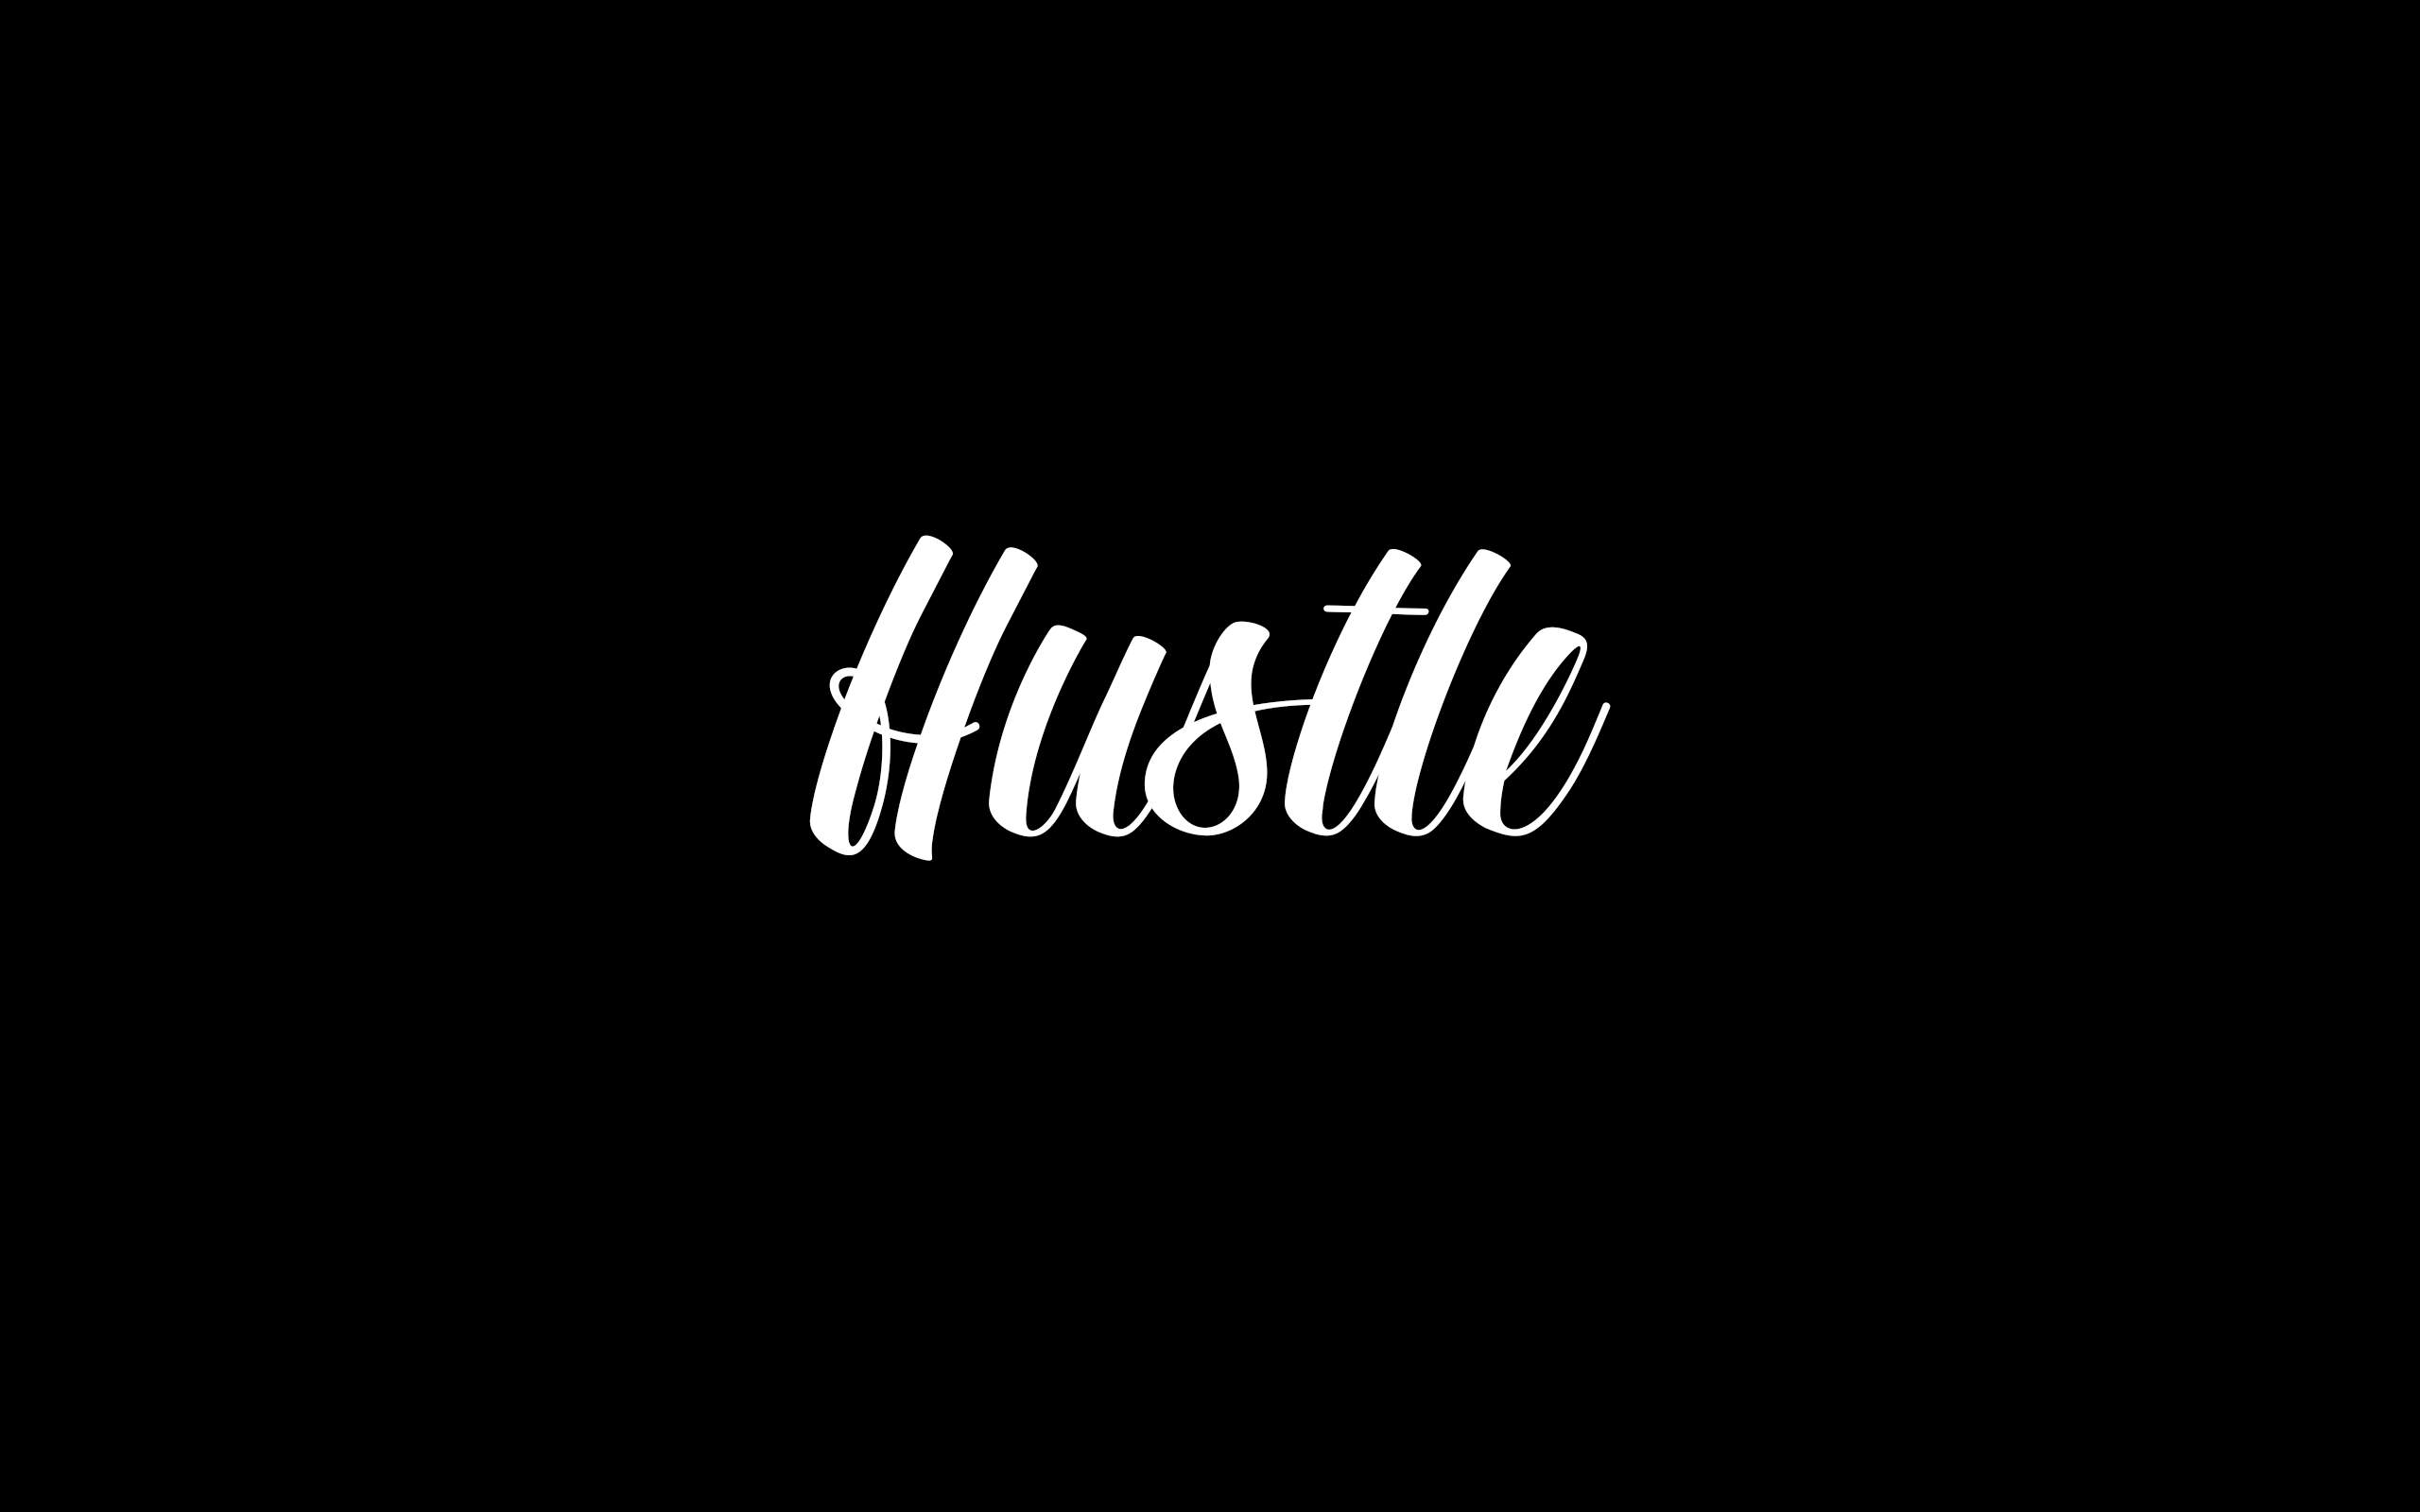 Typography Hustle desktop